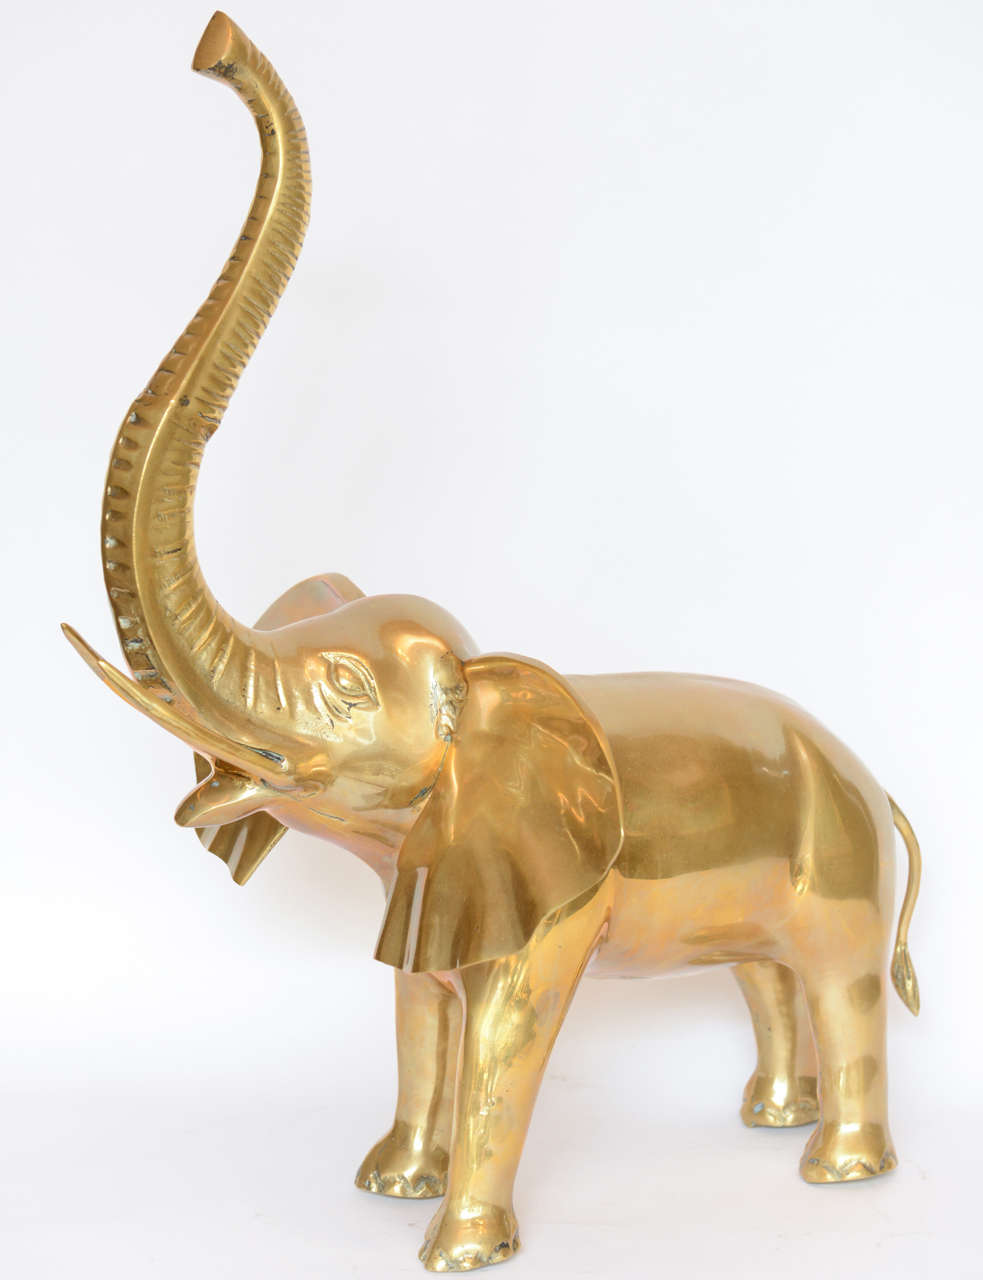 A majestic large scale brass elephant sculpture.